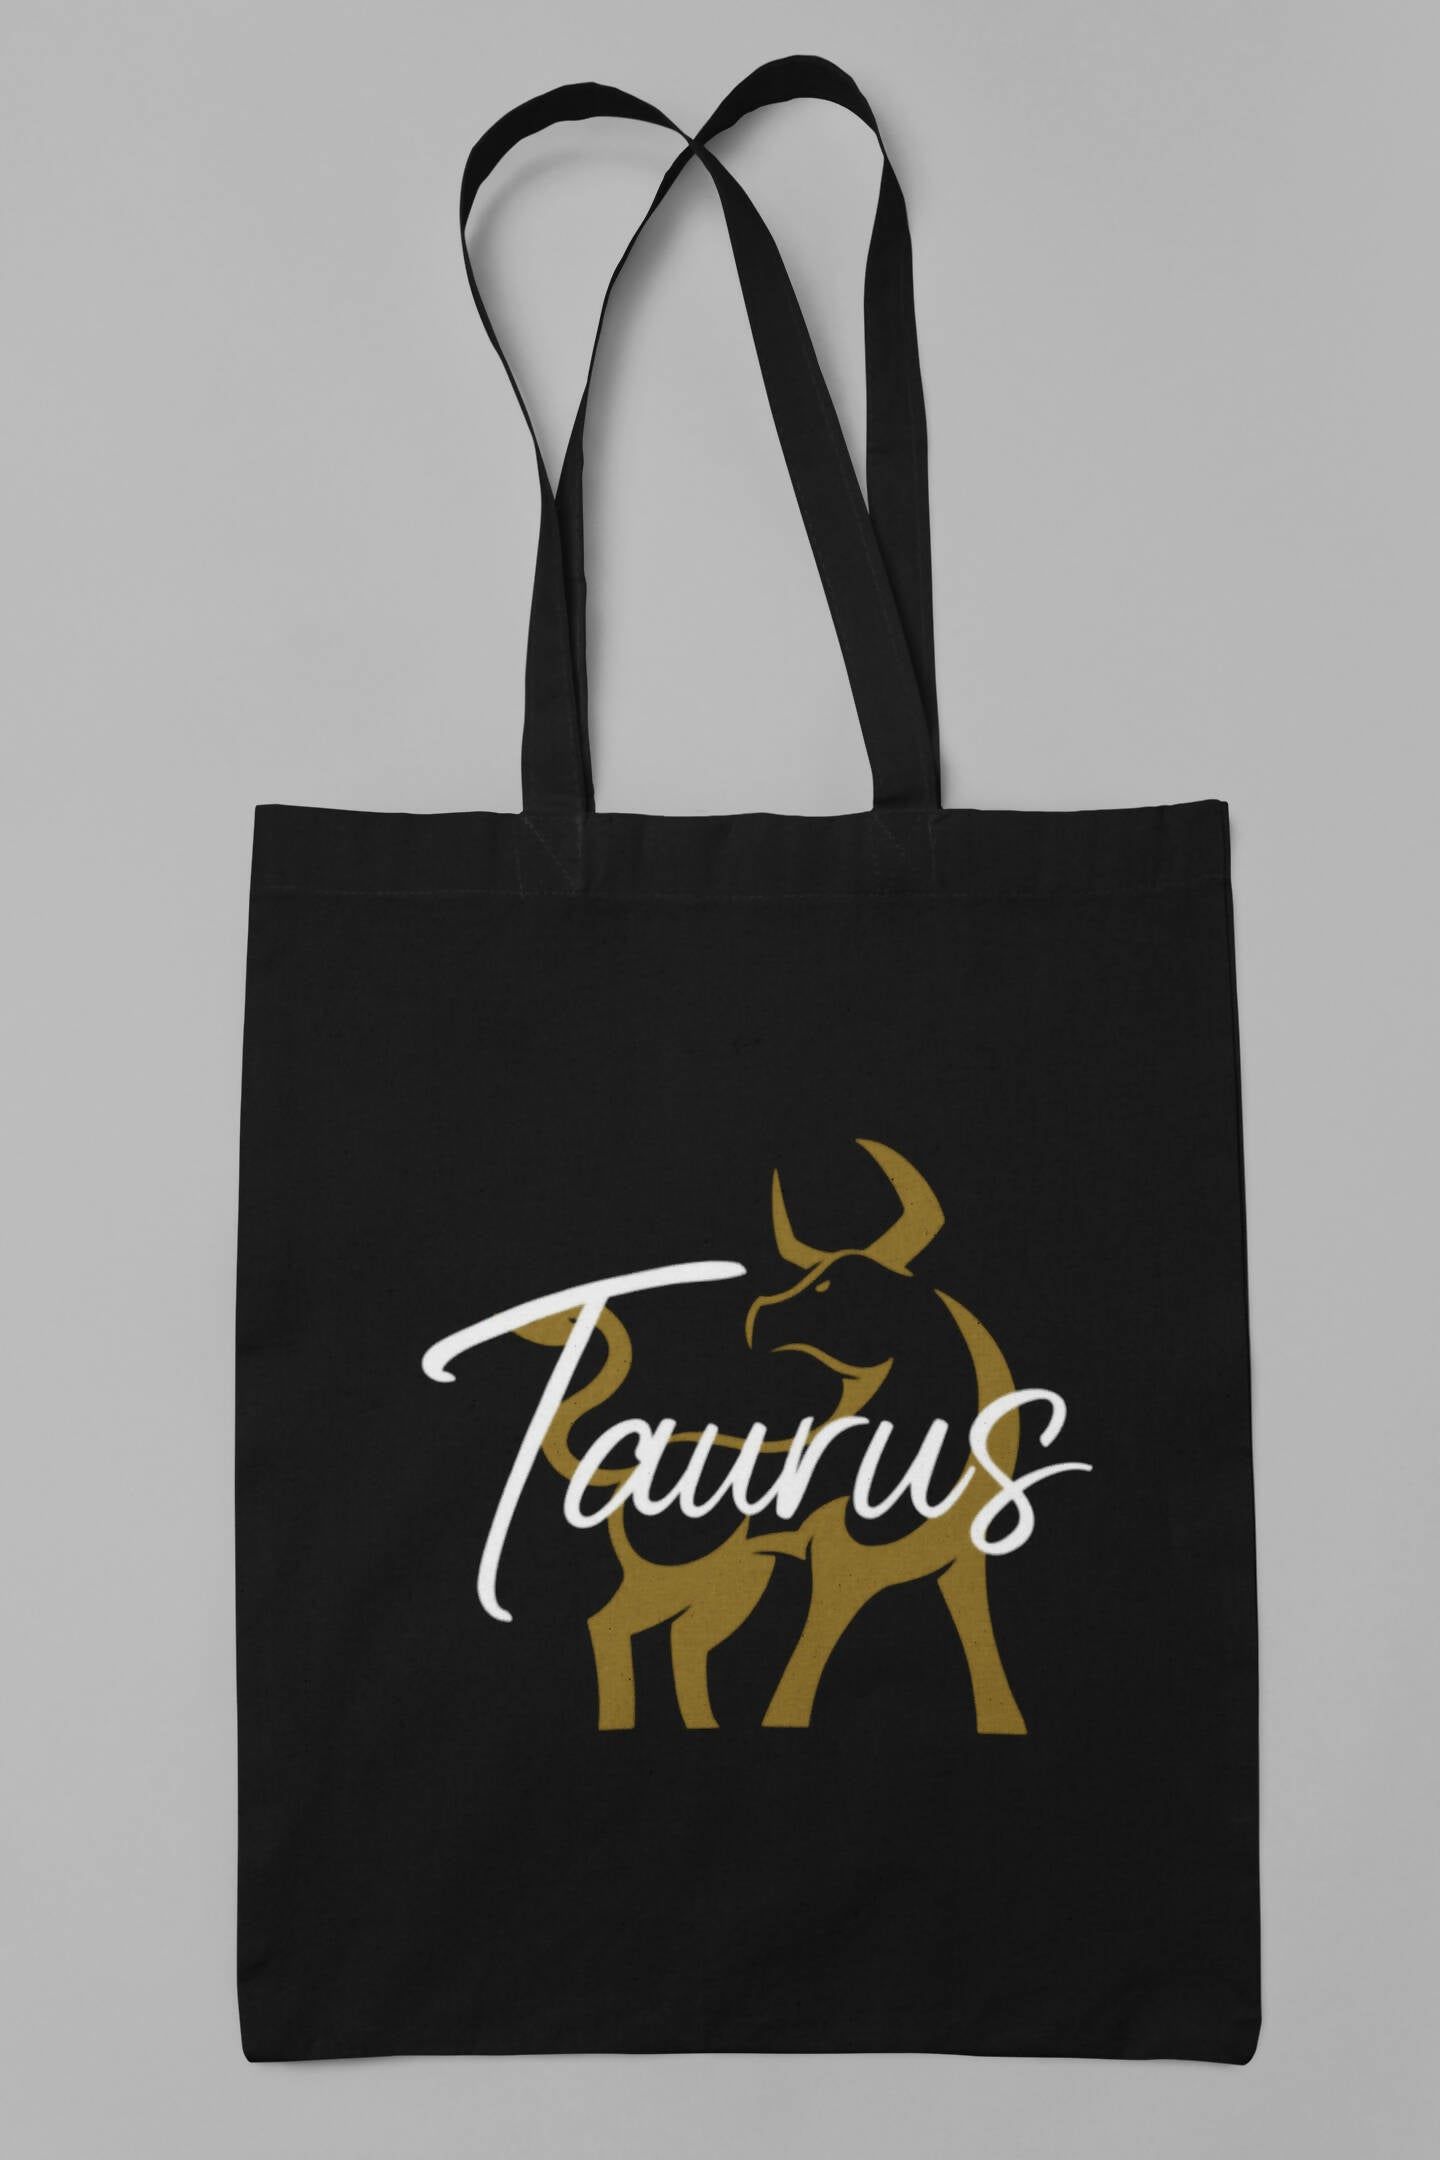 Taurus Gold Symbol Tote Bag with Avocado Design